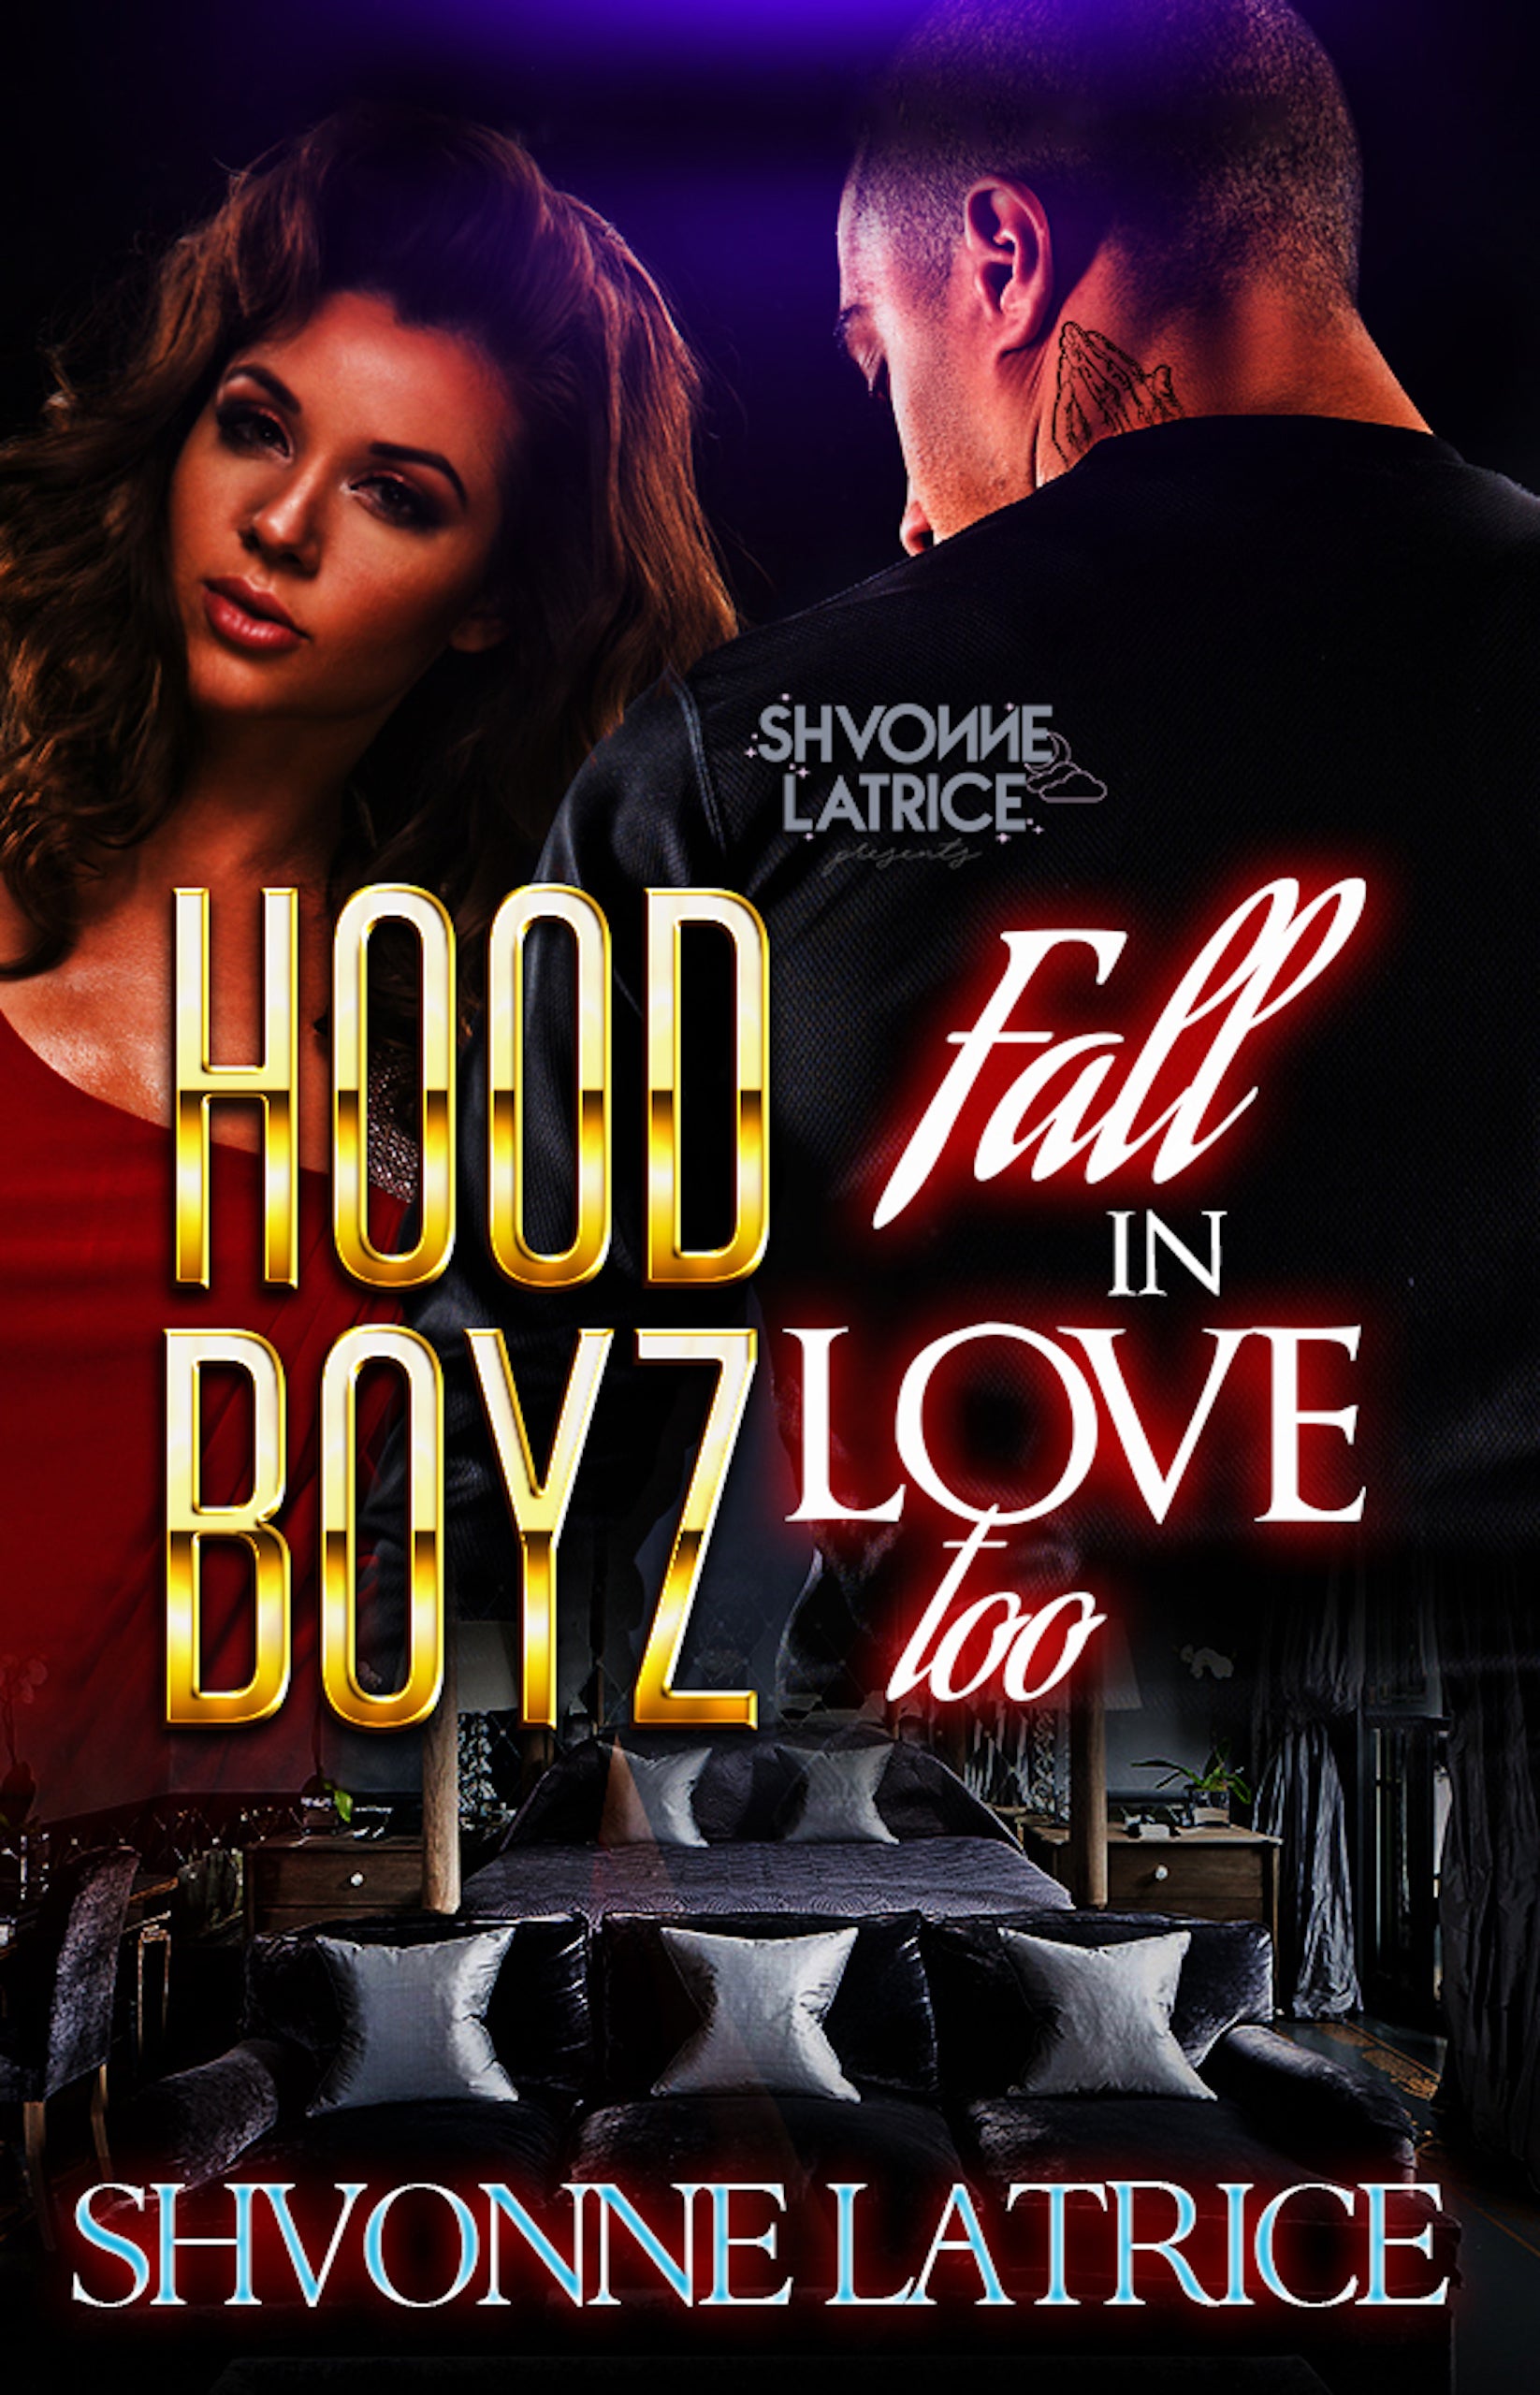 Hood Boyz Fall In Love Too